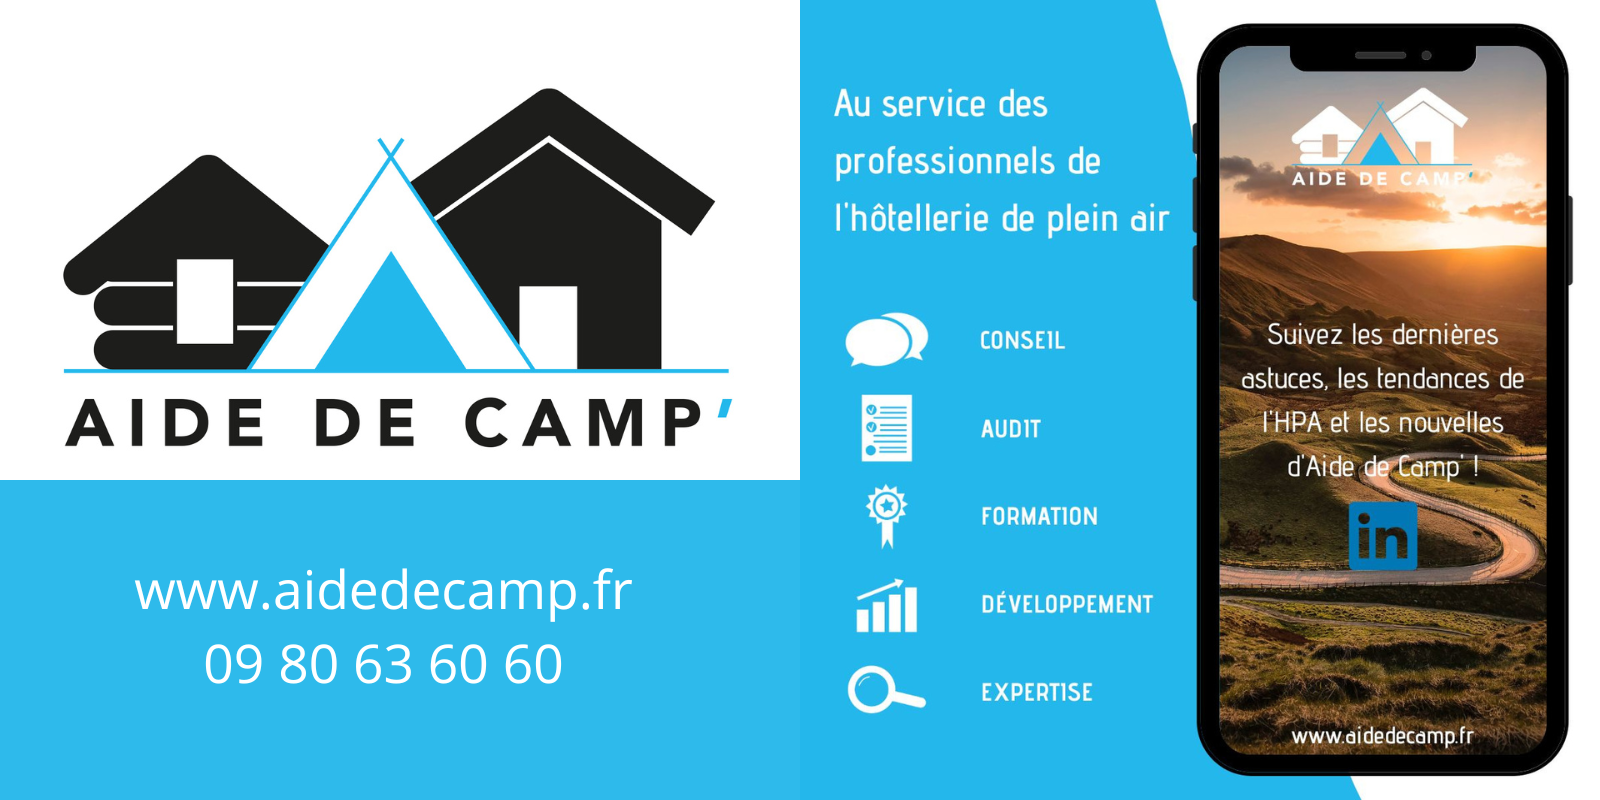 (c) Aidedecamp.fr